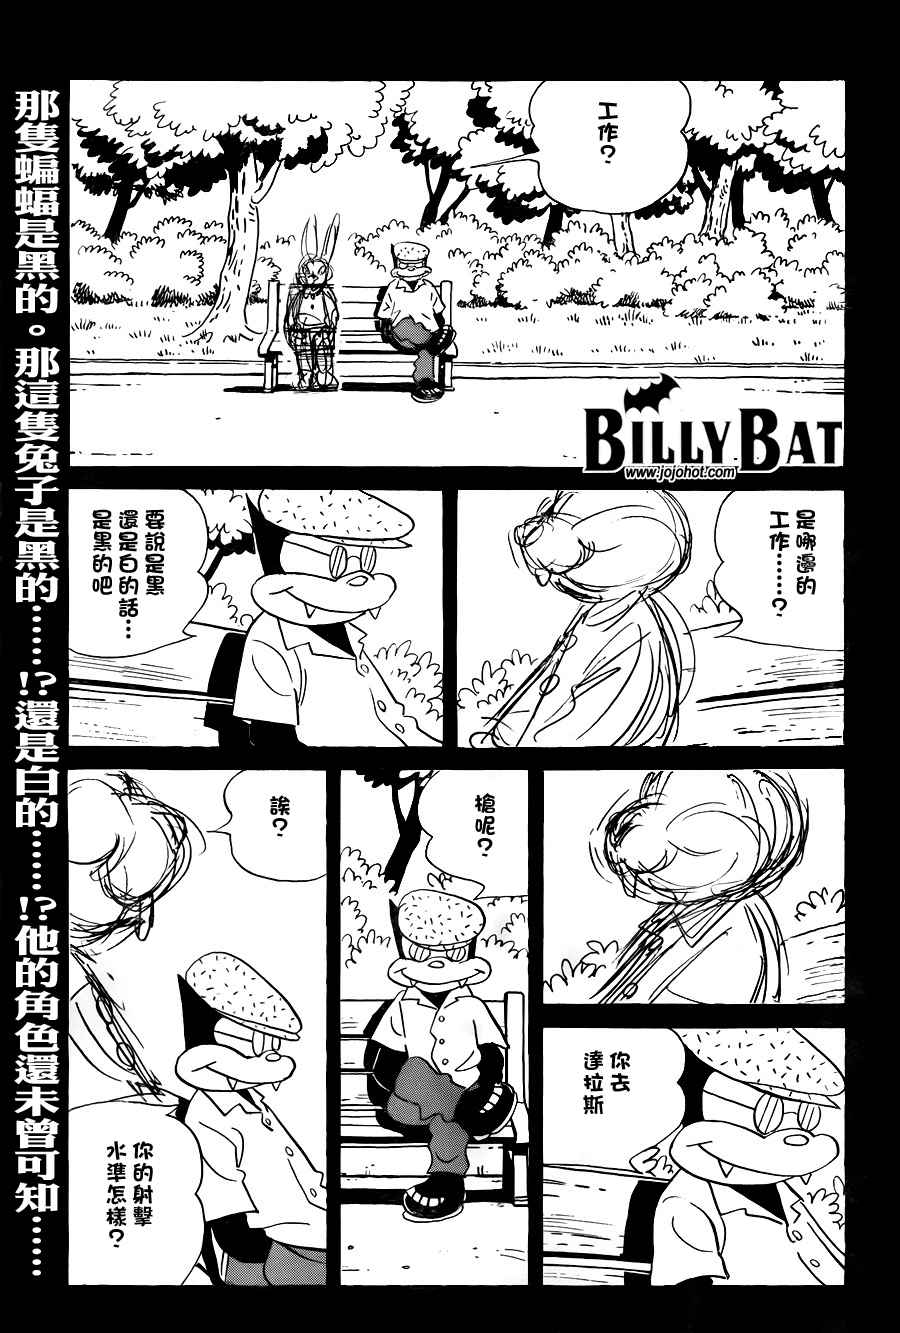 Billy_Bat - 第4卷(3/5) - 5